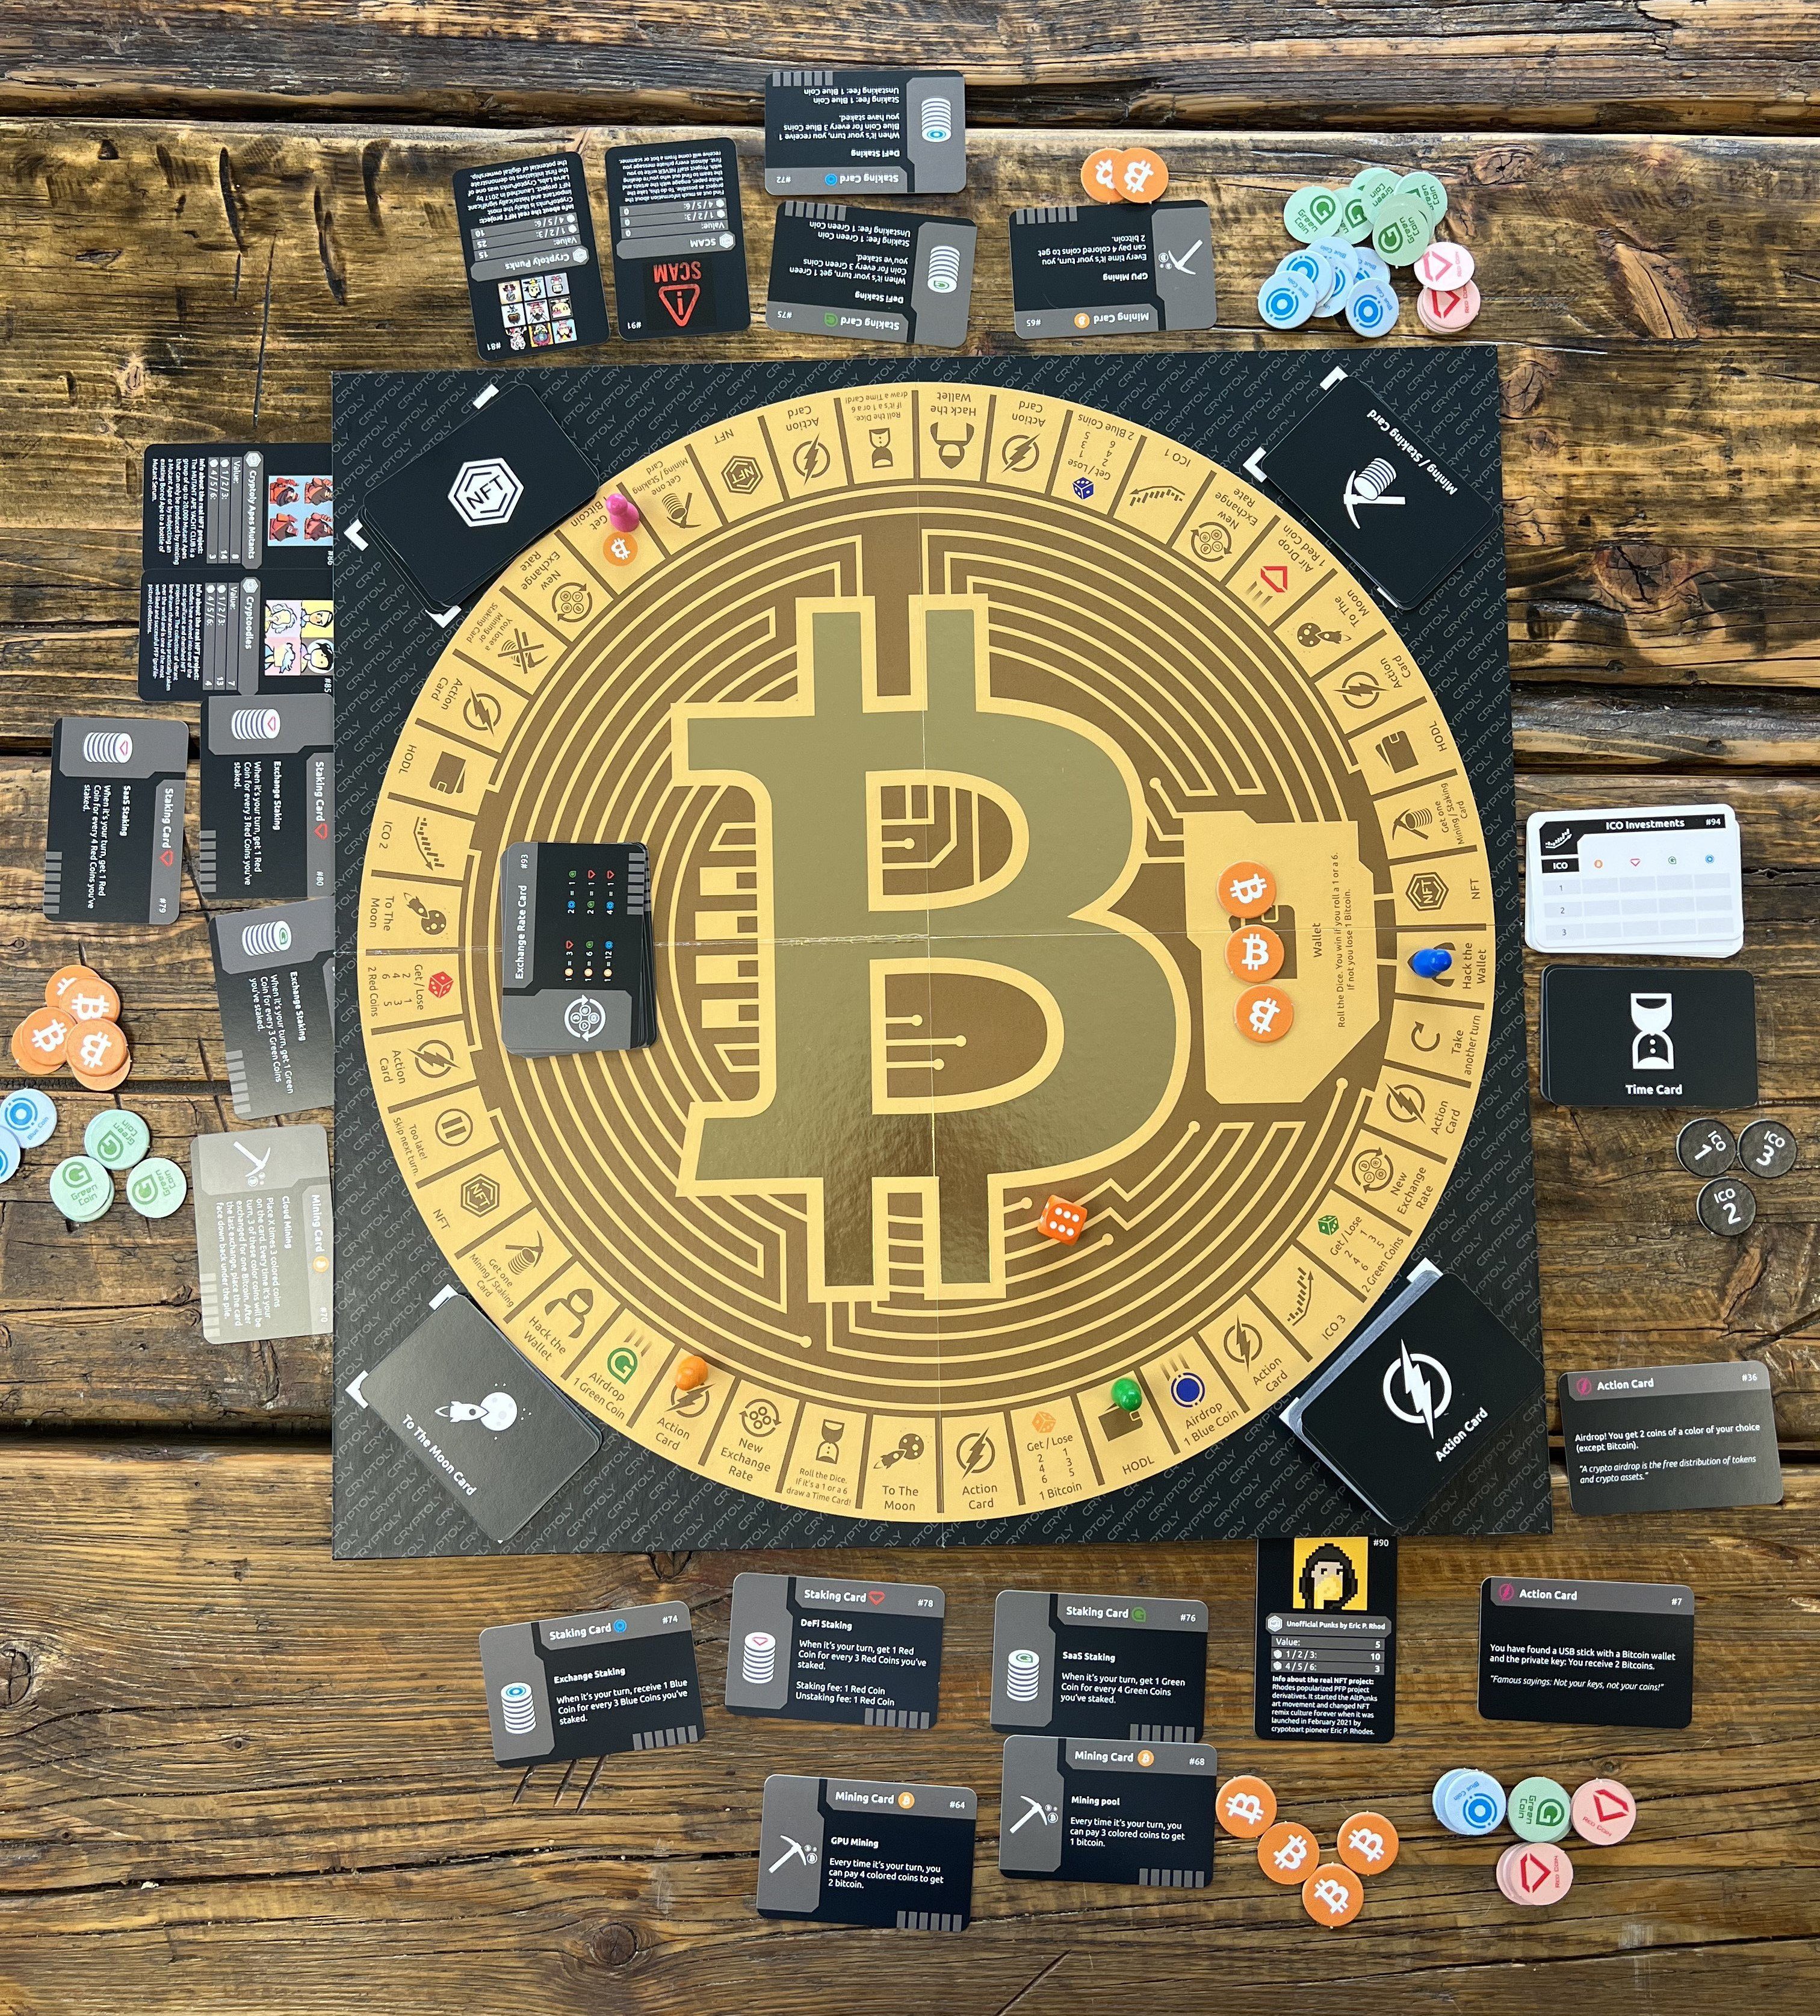 Gomazing Spiel, CRYPTOLY To And Bitcoin Das Beyond The mehrsprachige Moon Brettspiel